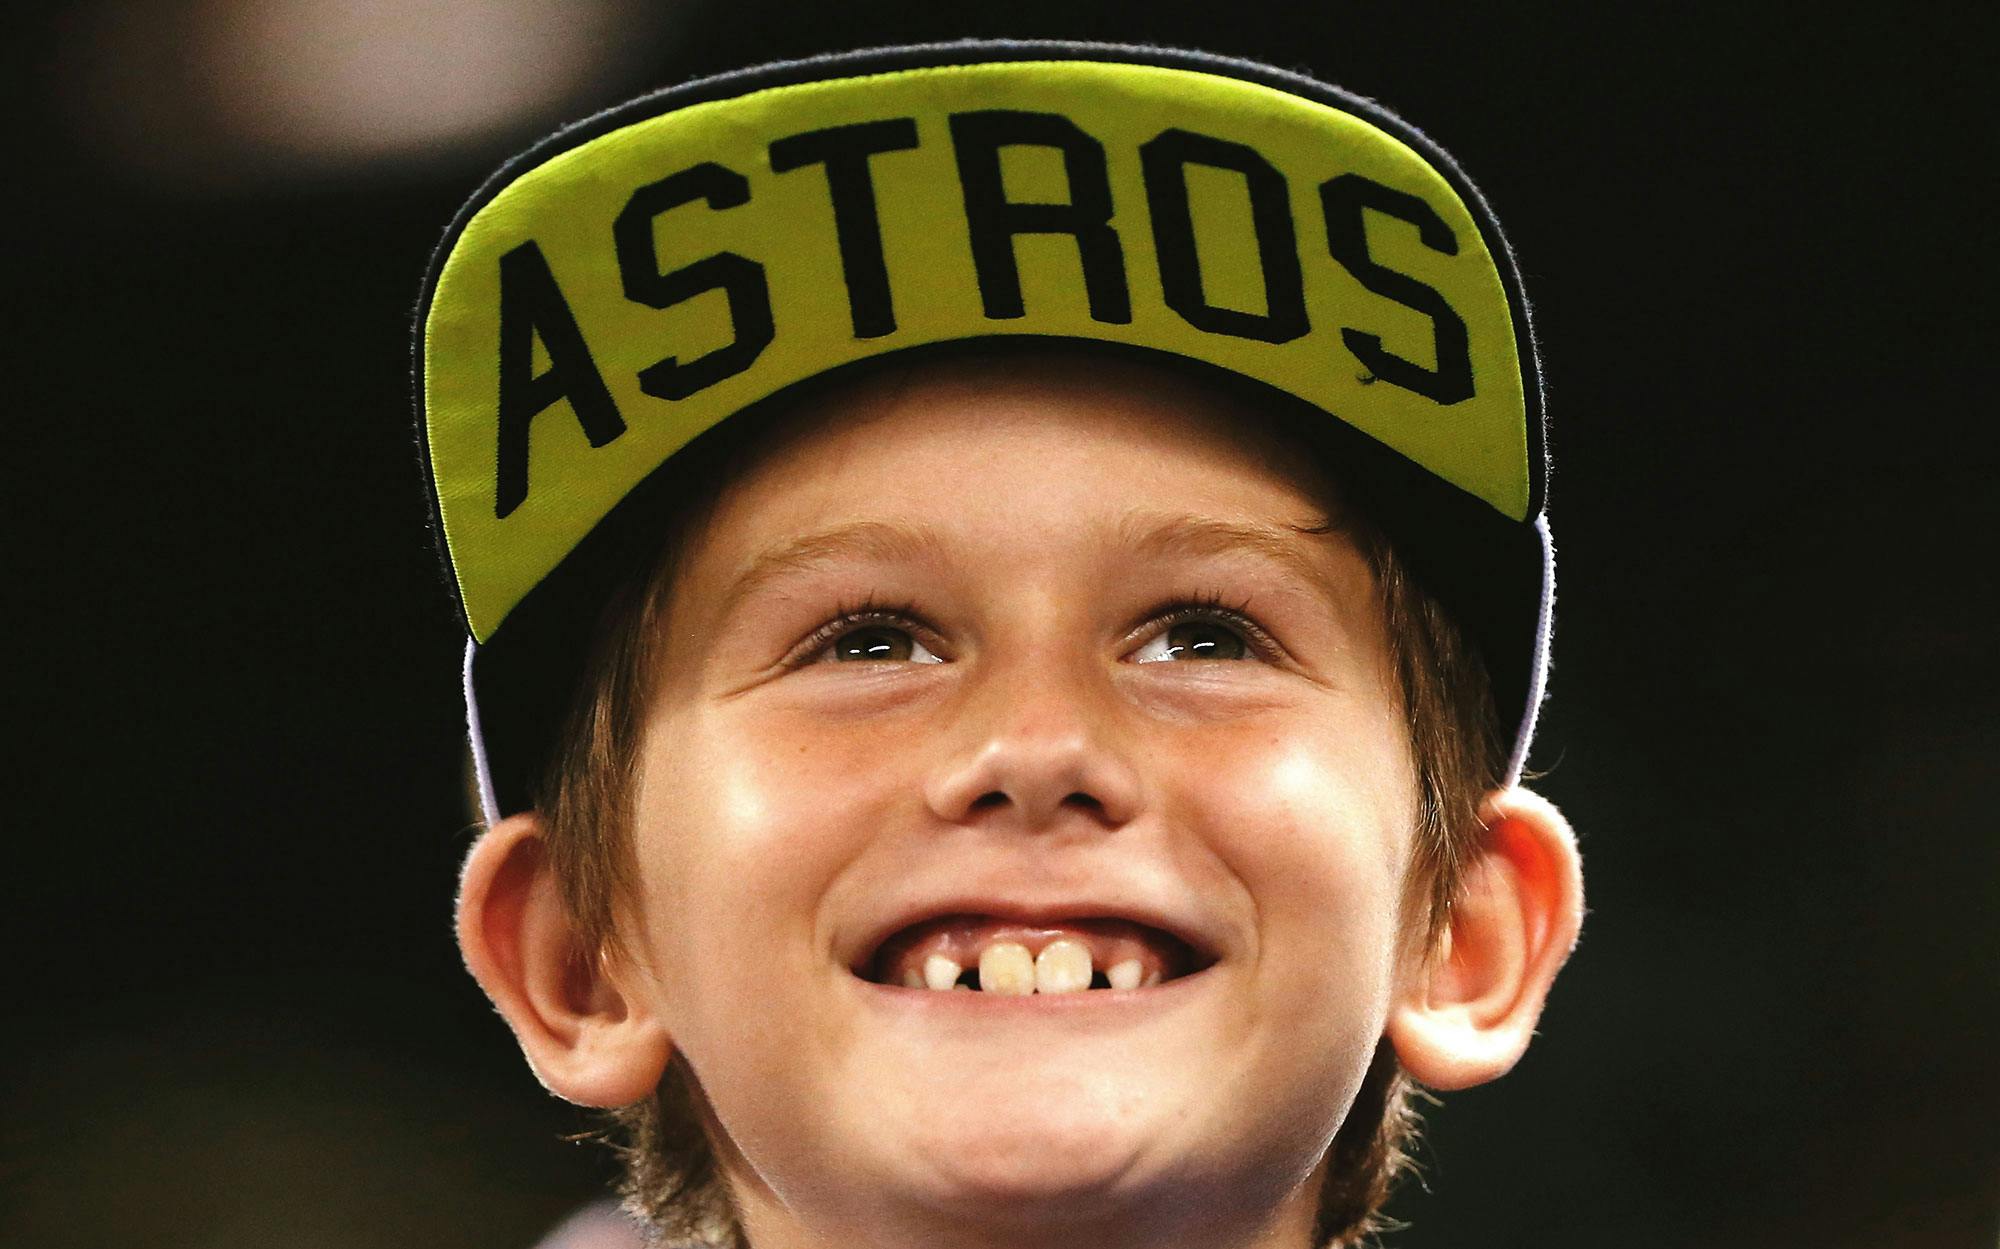 Once mocked, bright Astros jerseys have developed into fan favorite